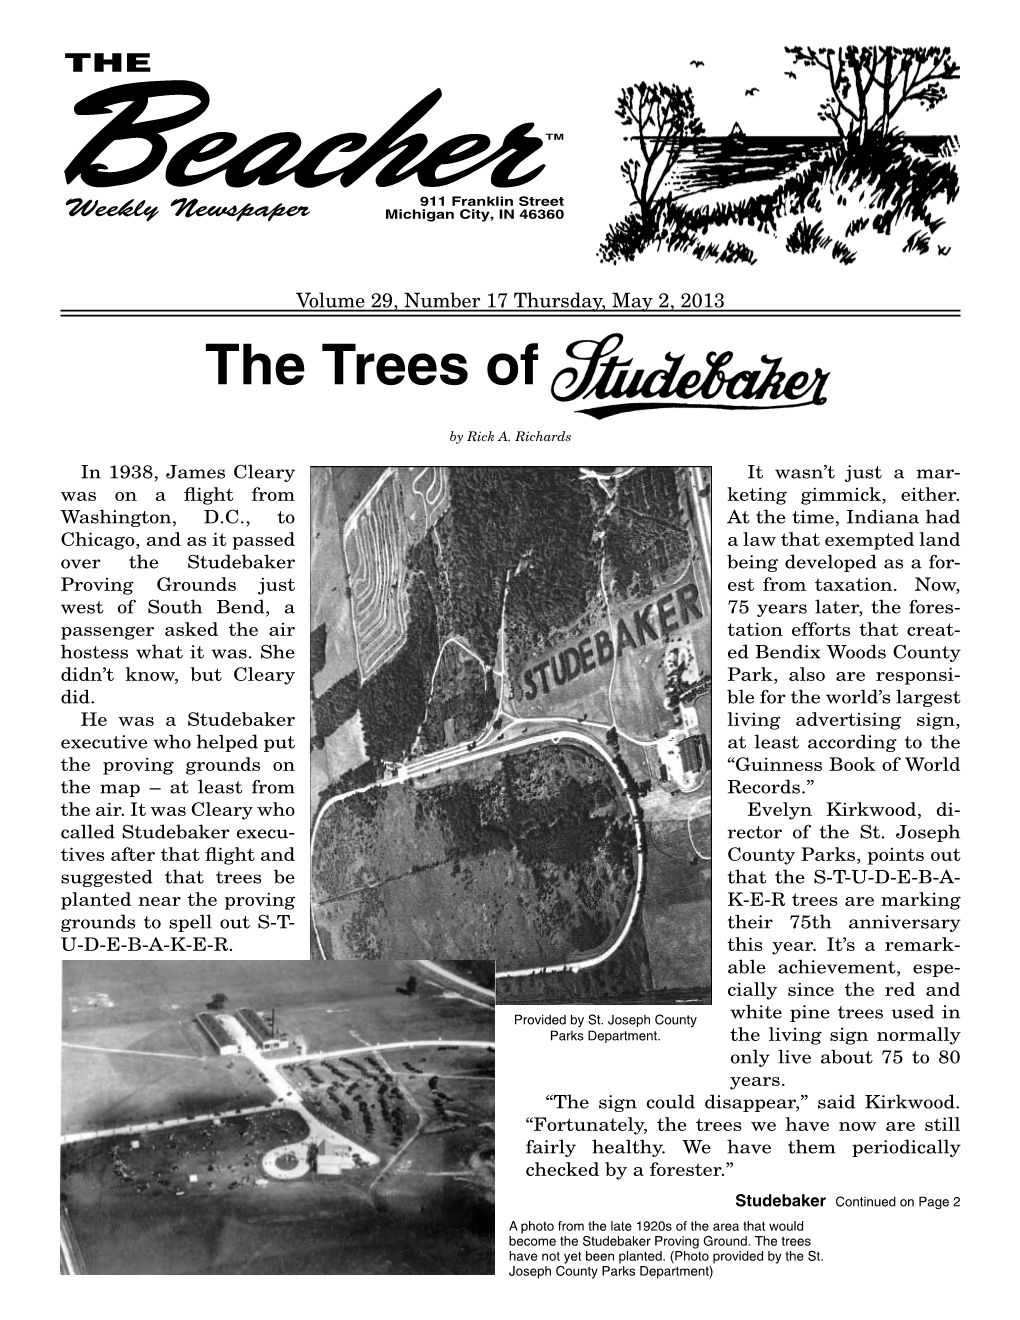 The Trees of Studebaker